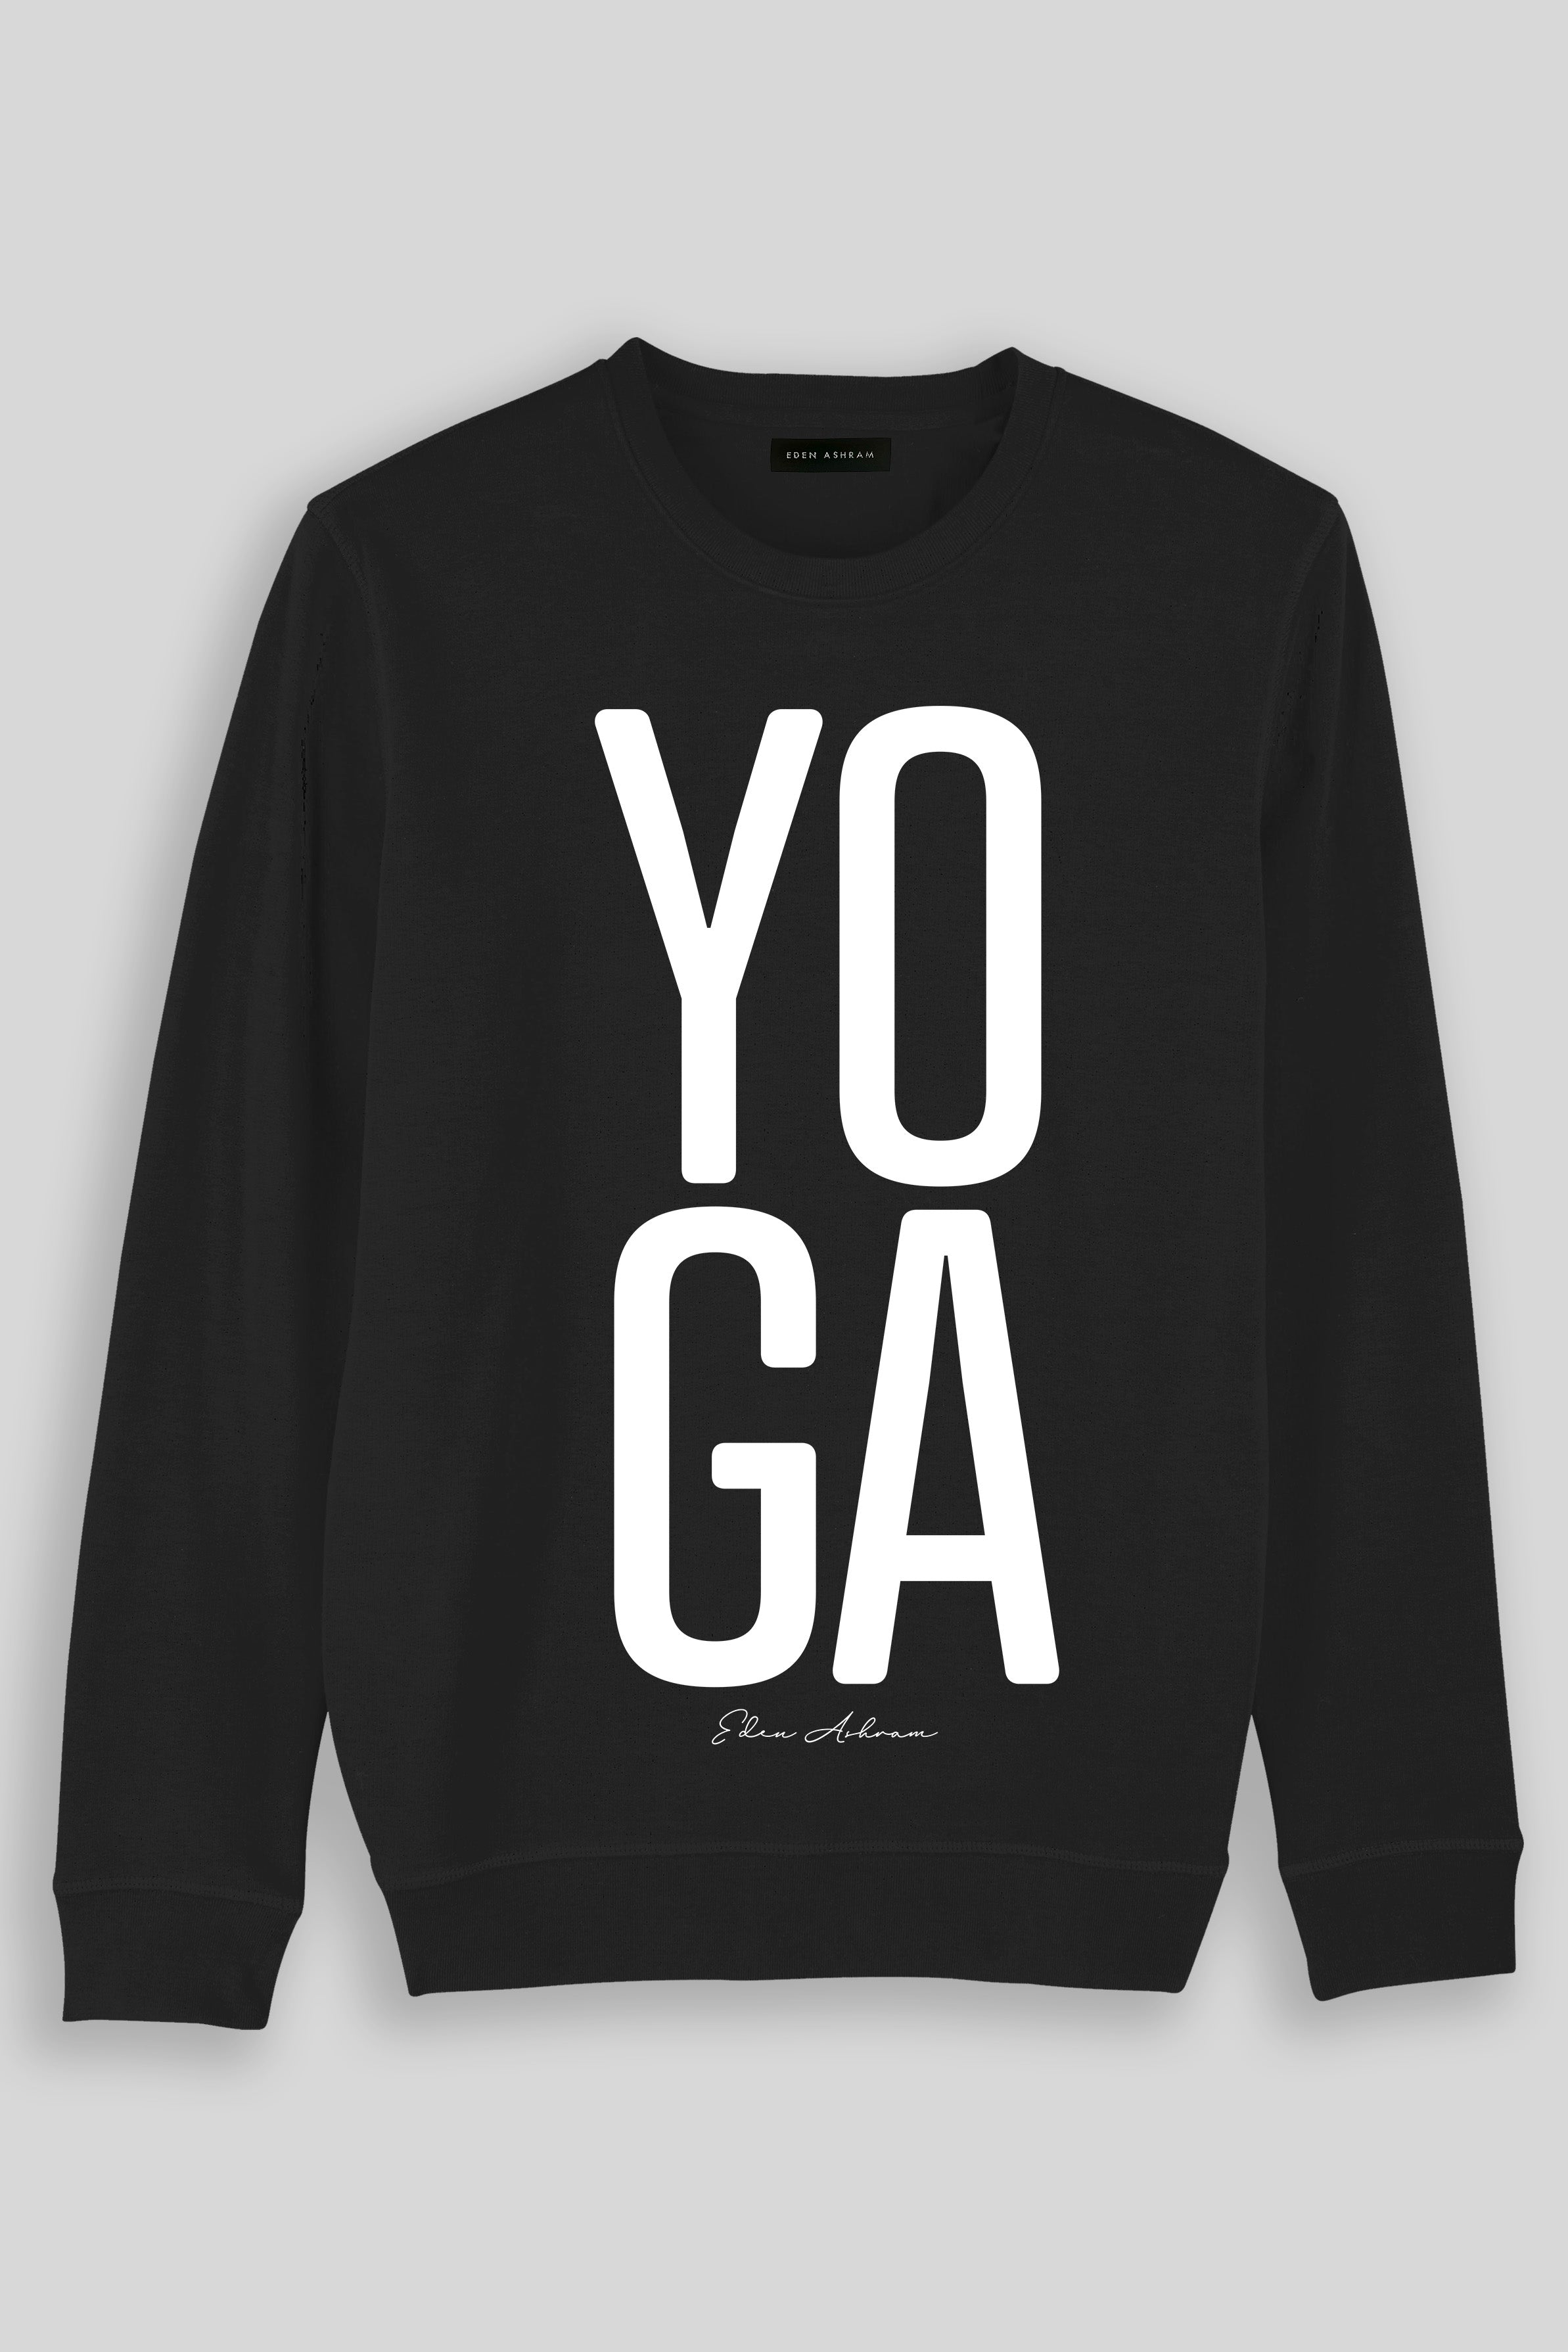 EDEN ASHRAM YOGA Premium Crew Neck Sweatshirt Vintage Black